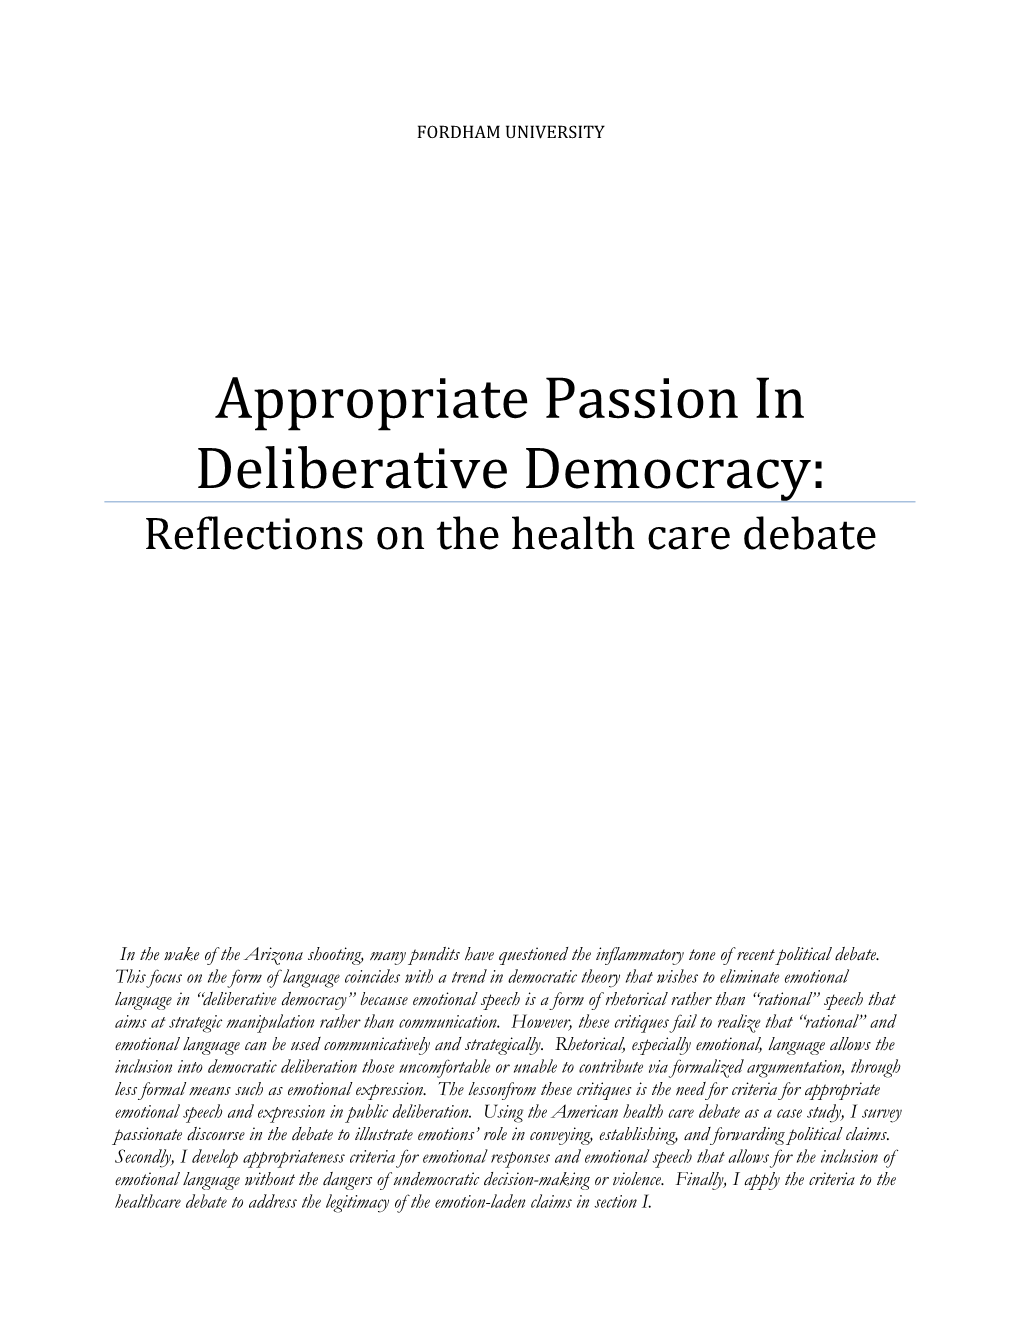 Appropriate Passion in Deliberative Democracy: Reflections on the Health Care Debate